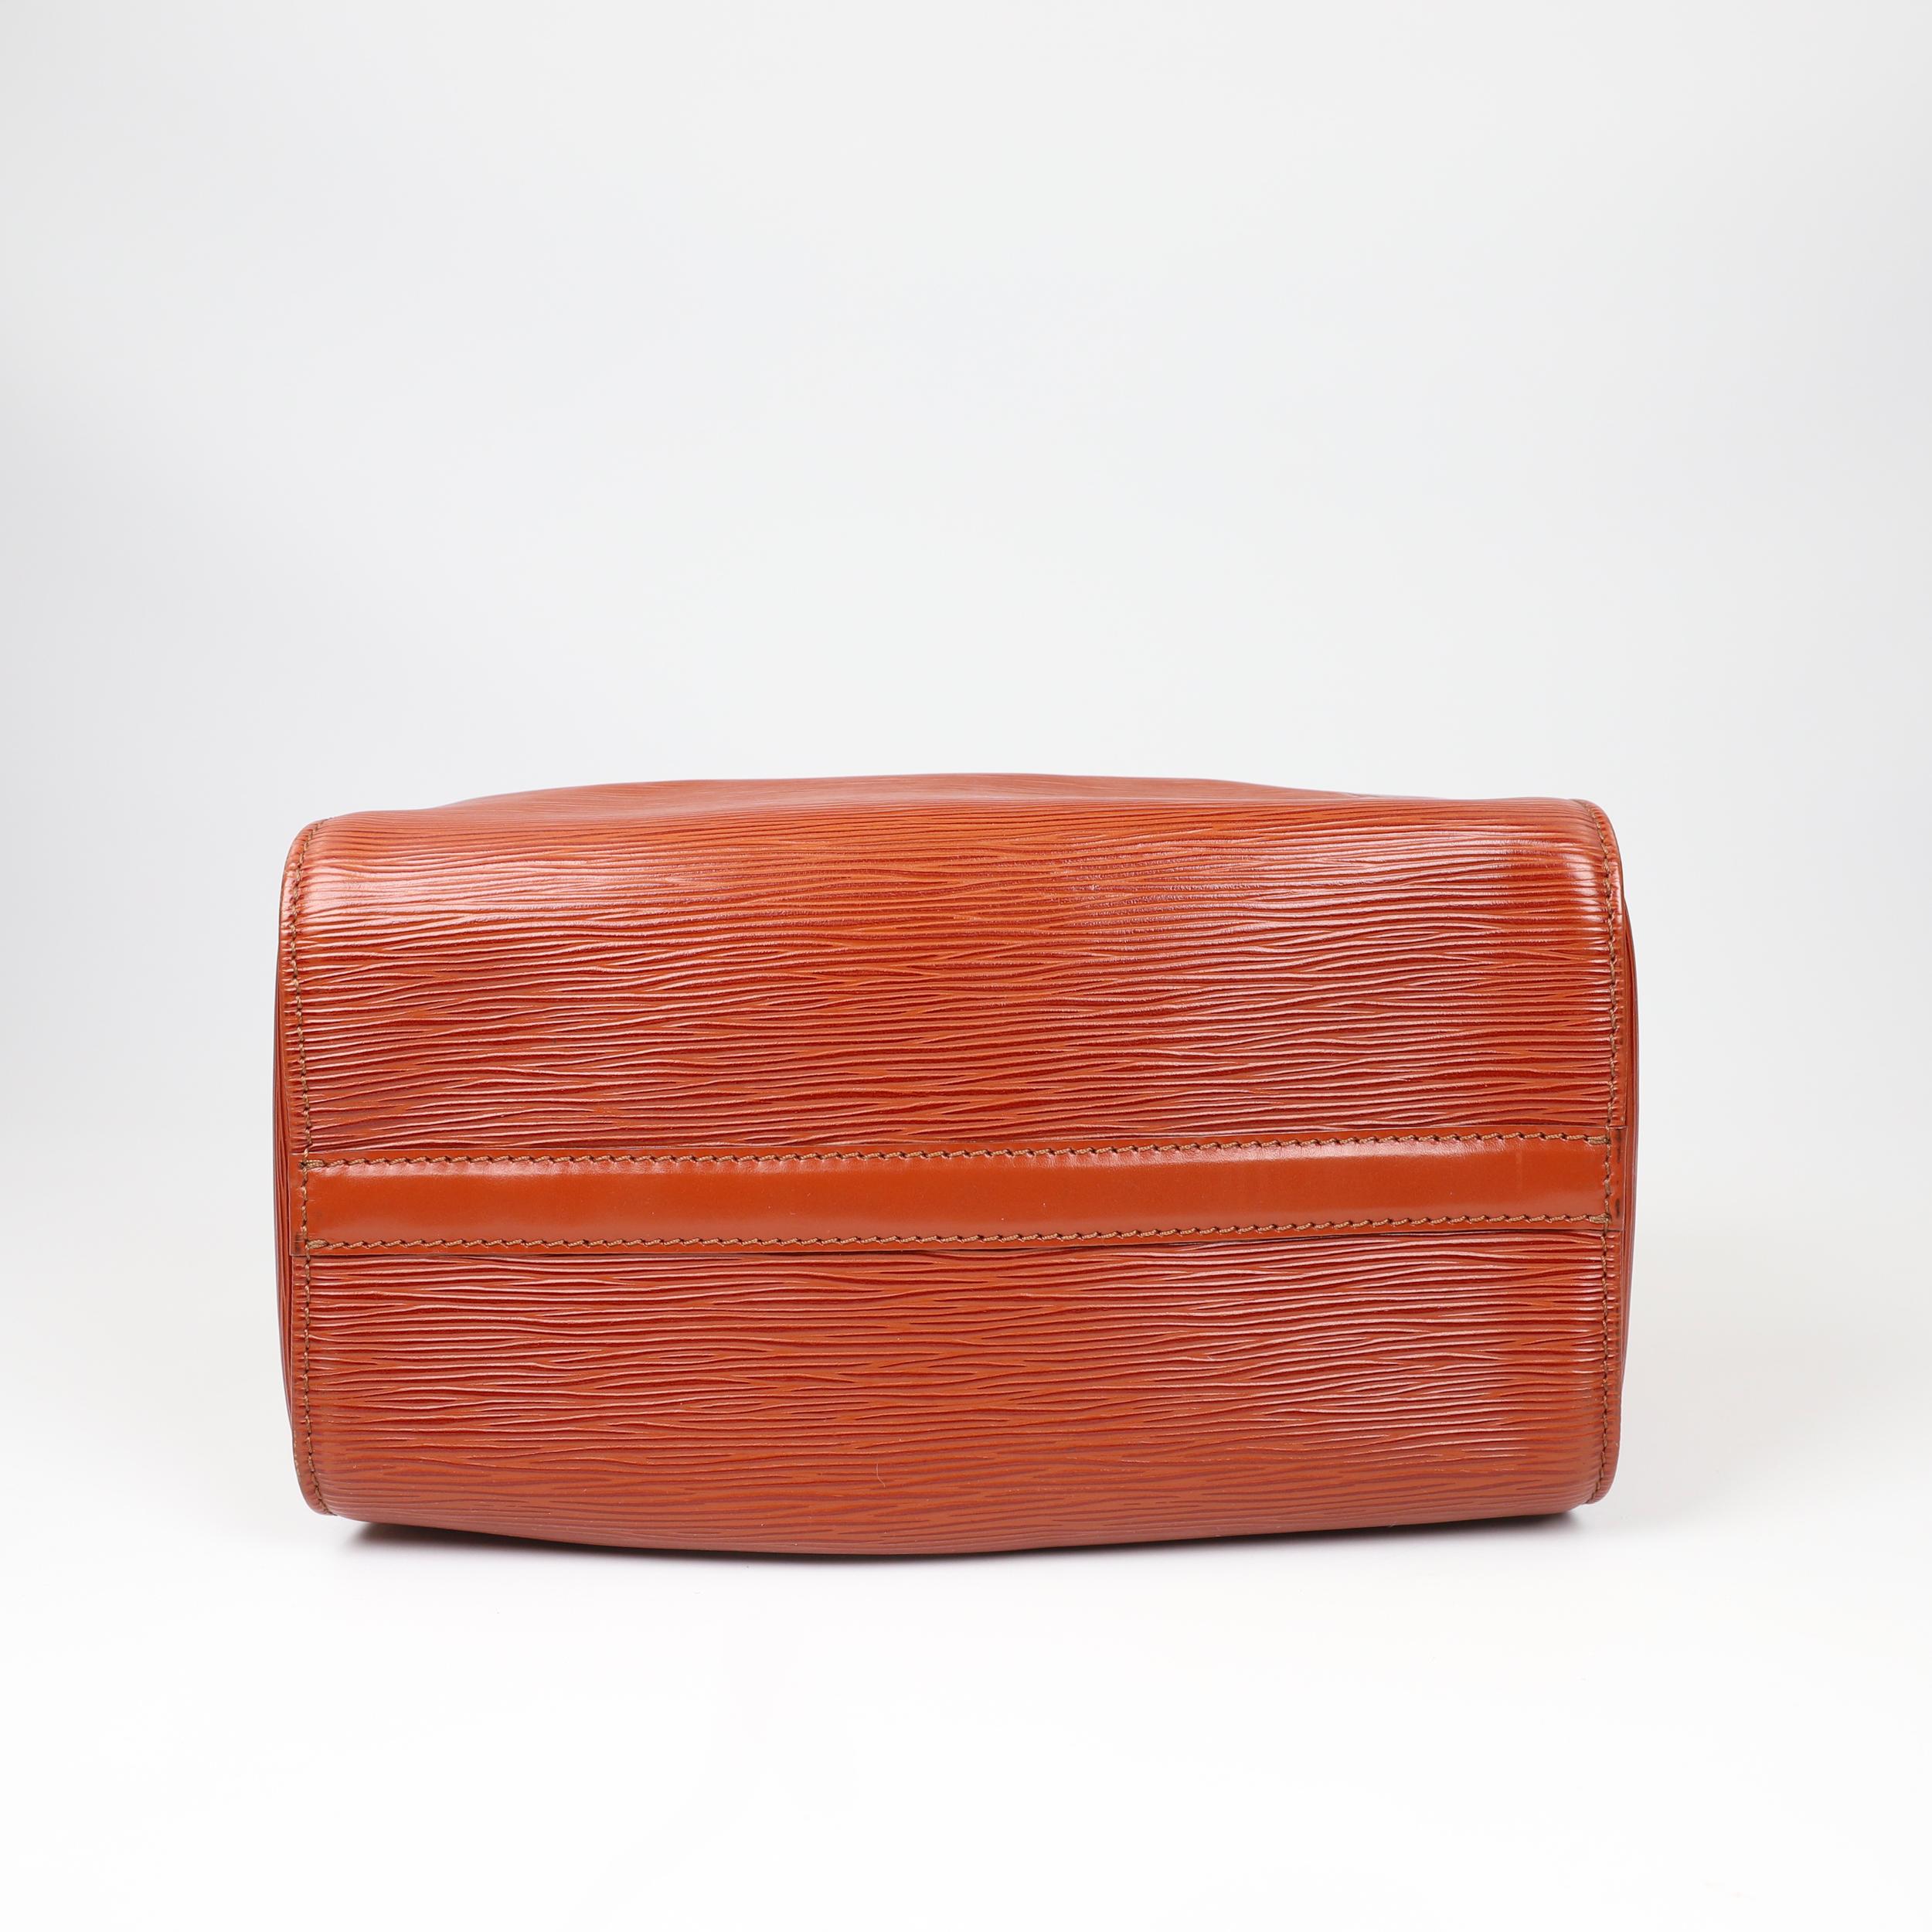 Louis Vuitton Speedy leather handbag 3